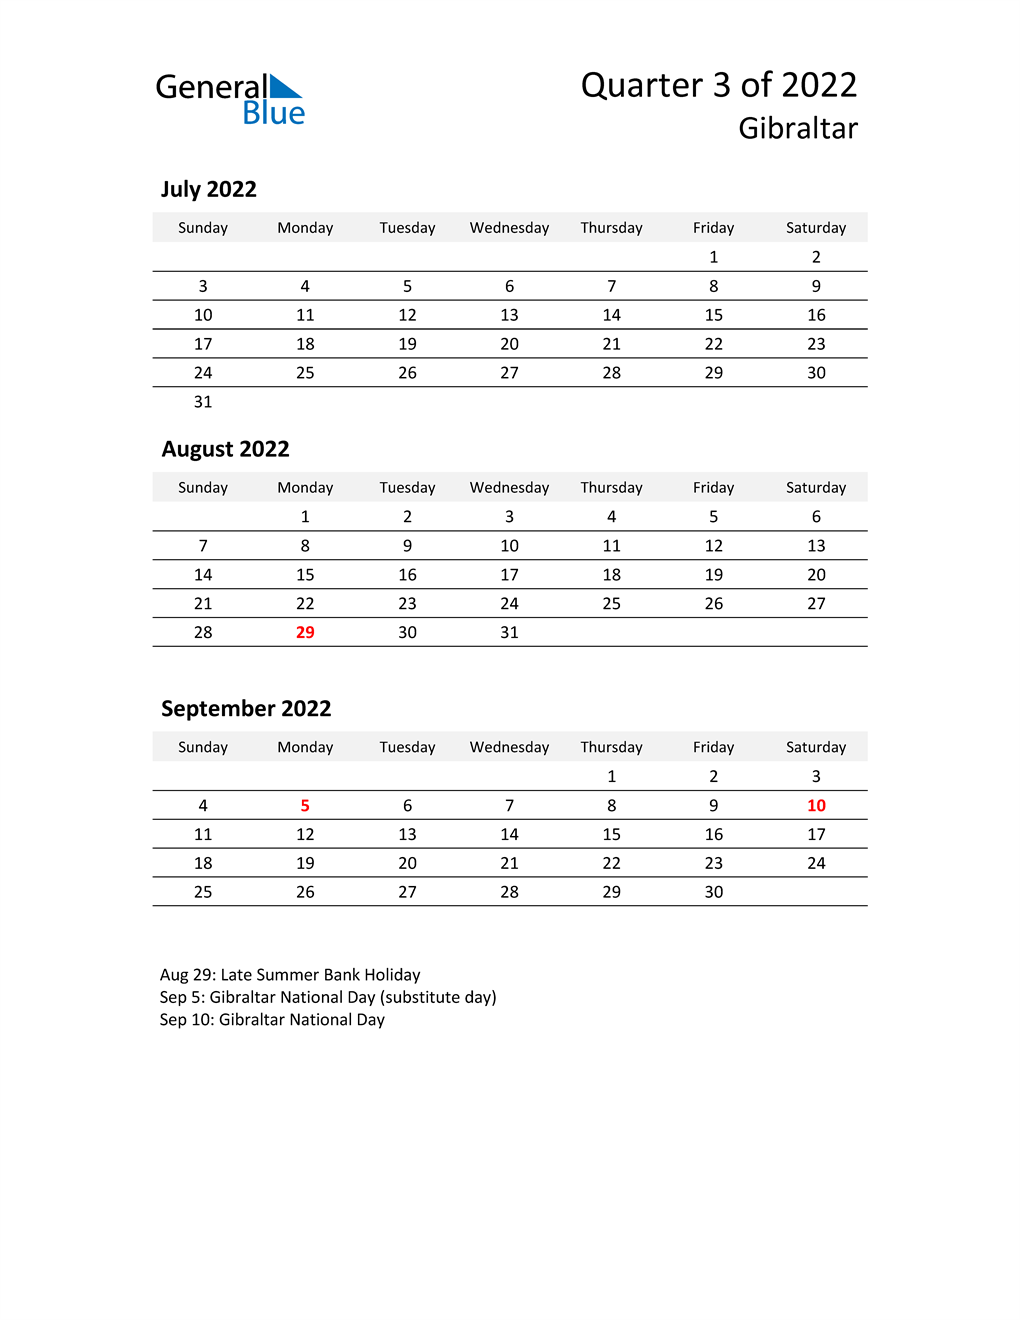  2022 Three-Month Calendar for Gibraltar